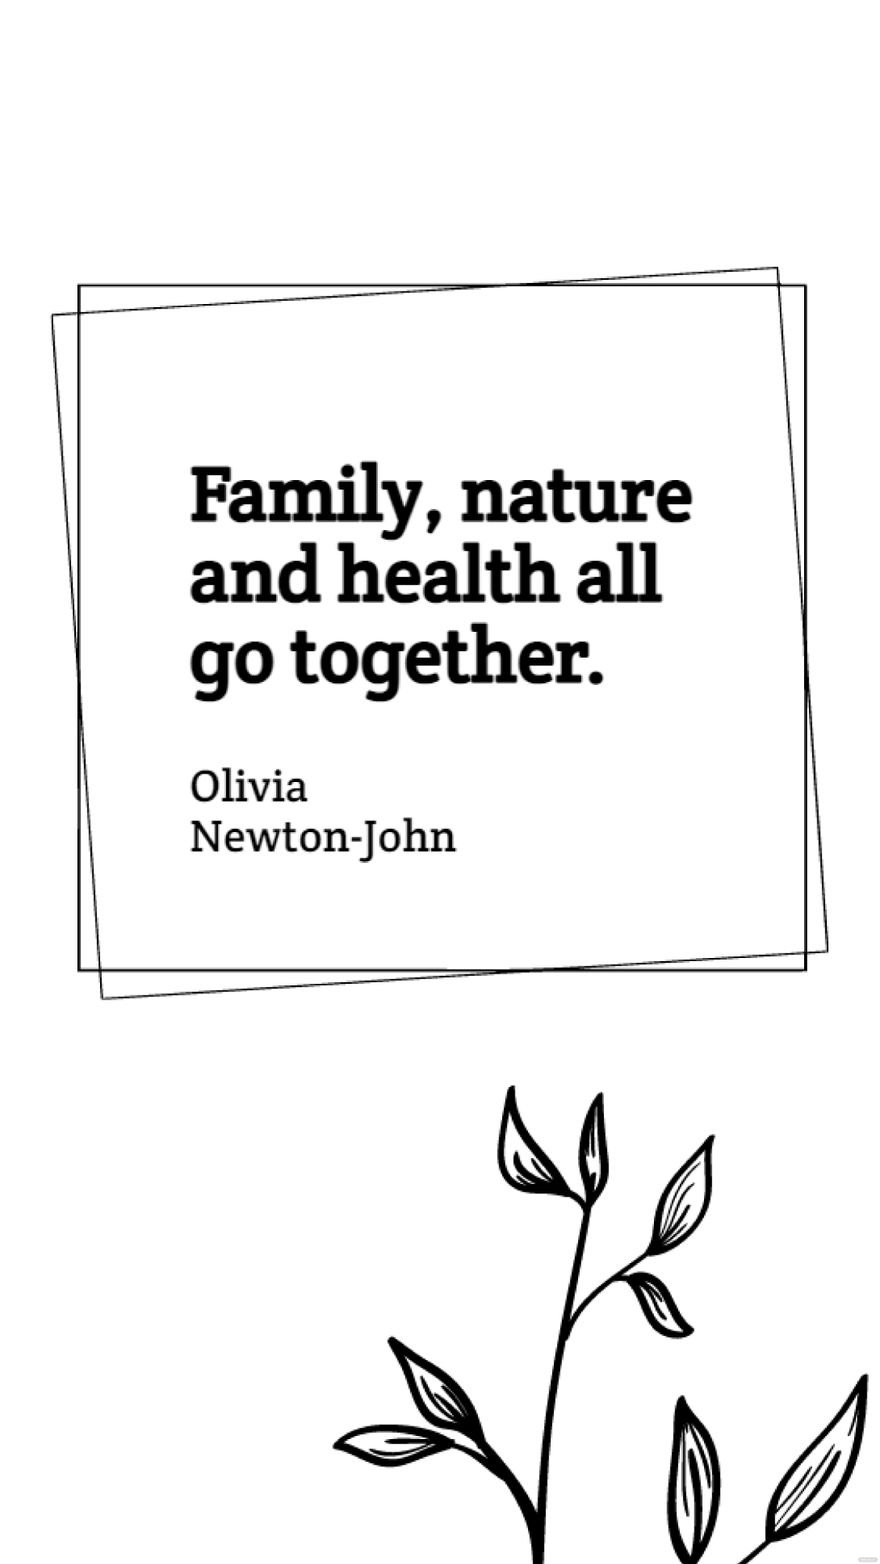 Olivia Newton-John - Family, nature and health all go together.